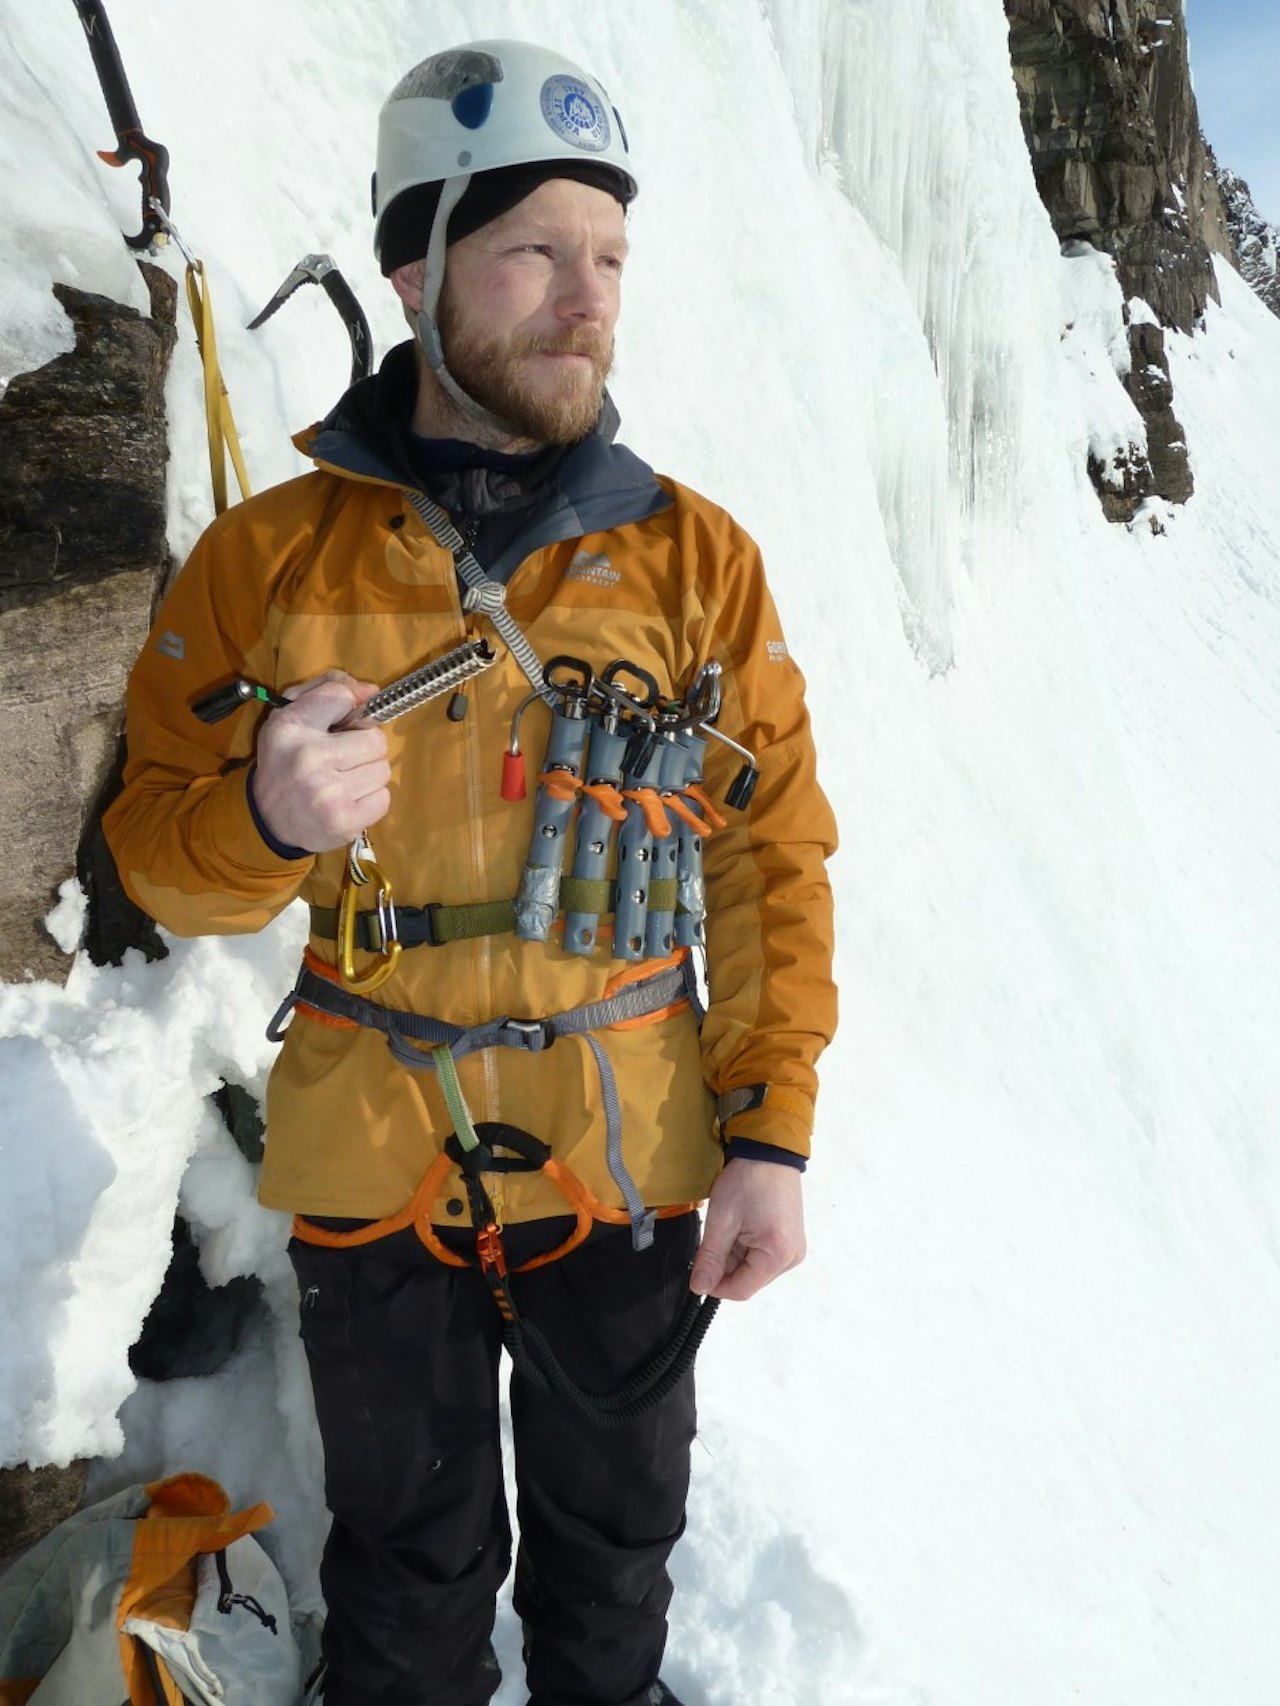 OMKOM I NATT: Eiliv Ruud (37) var en svært erfaren klatrer og basehopper. Foto: Alpinist.no